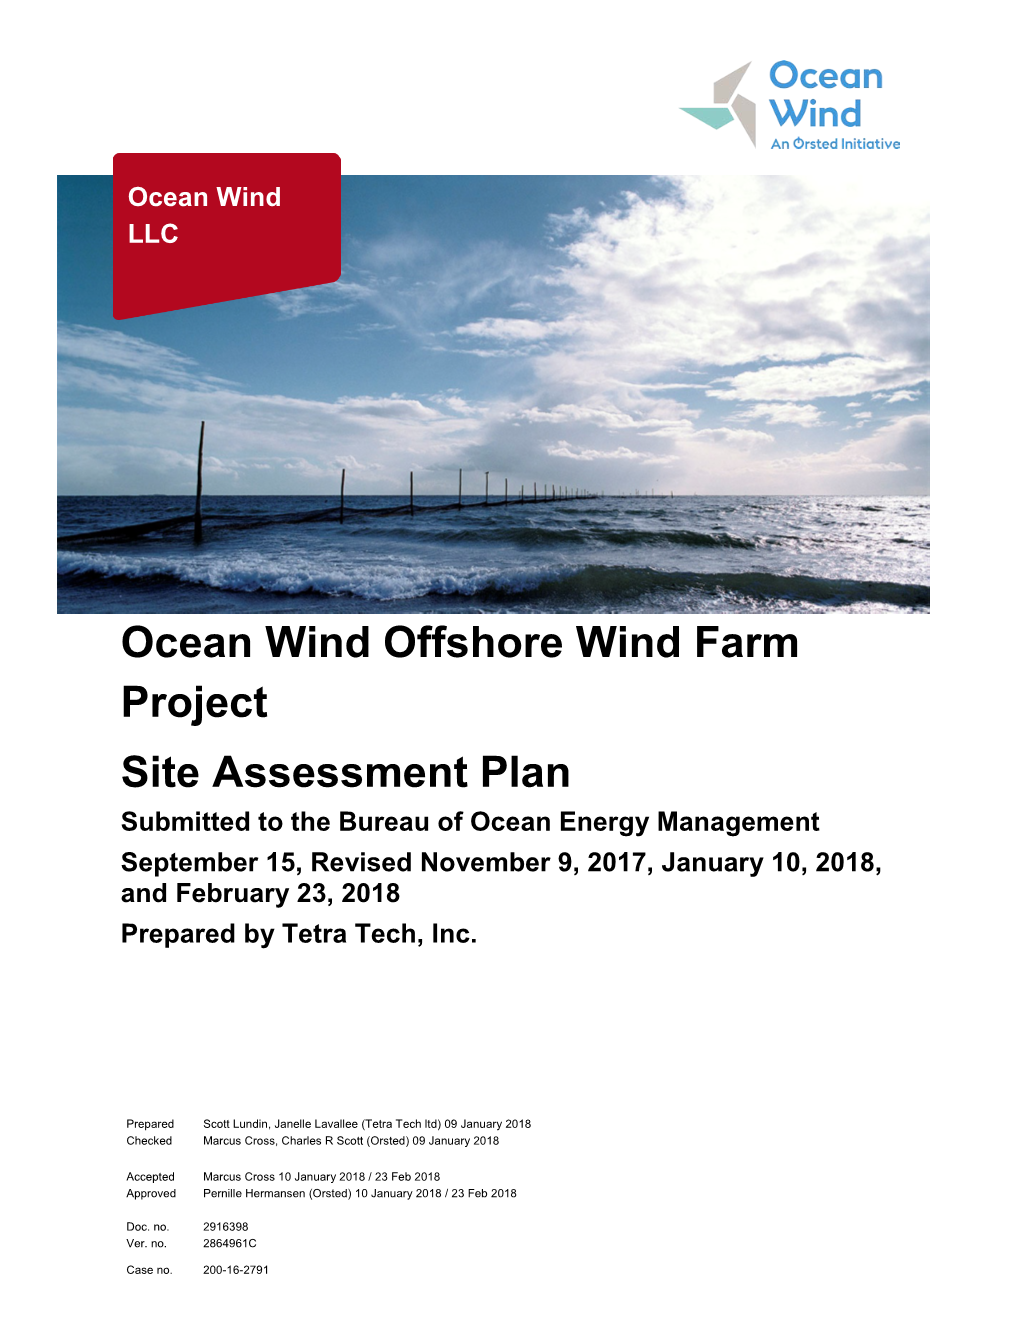 Ocean Wind Offshore Wind Farm Project Site Assessment Plan